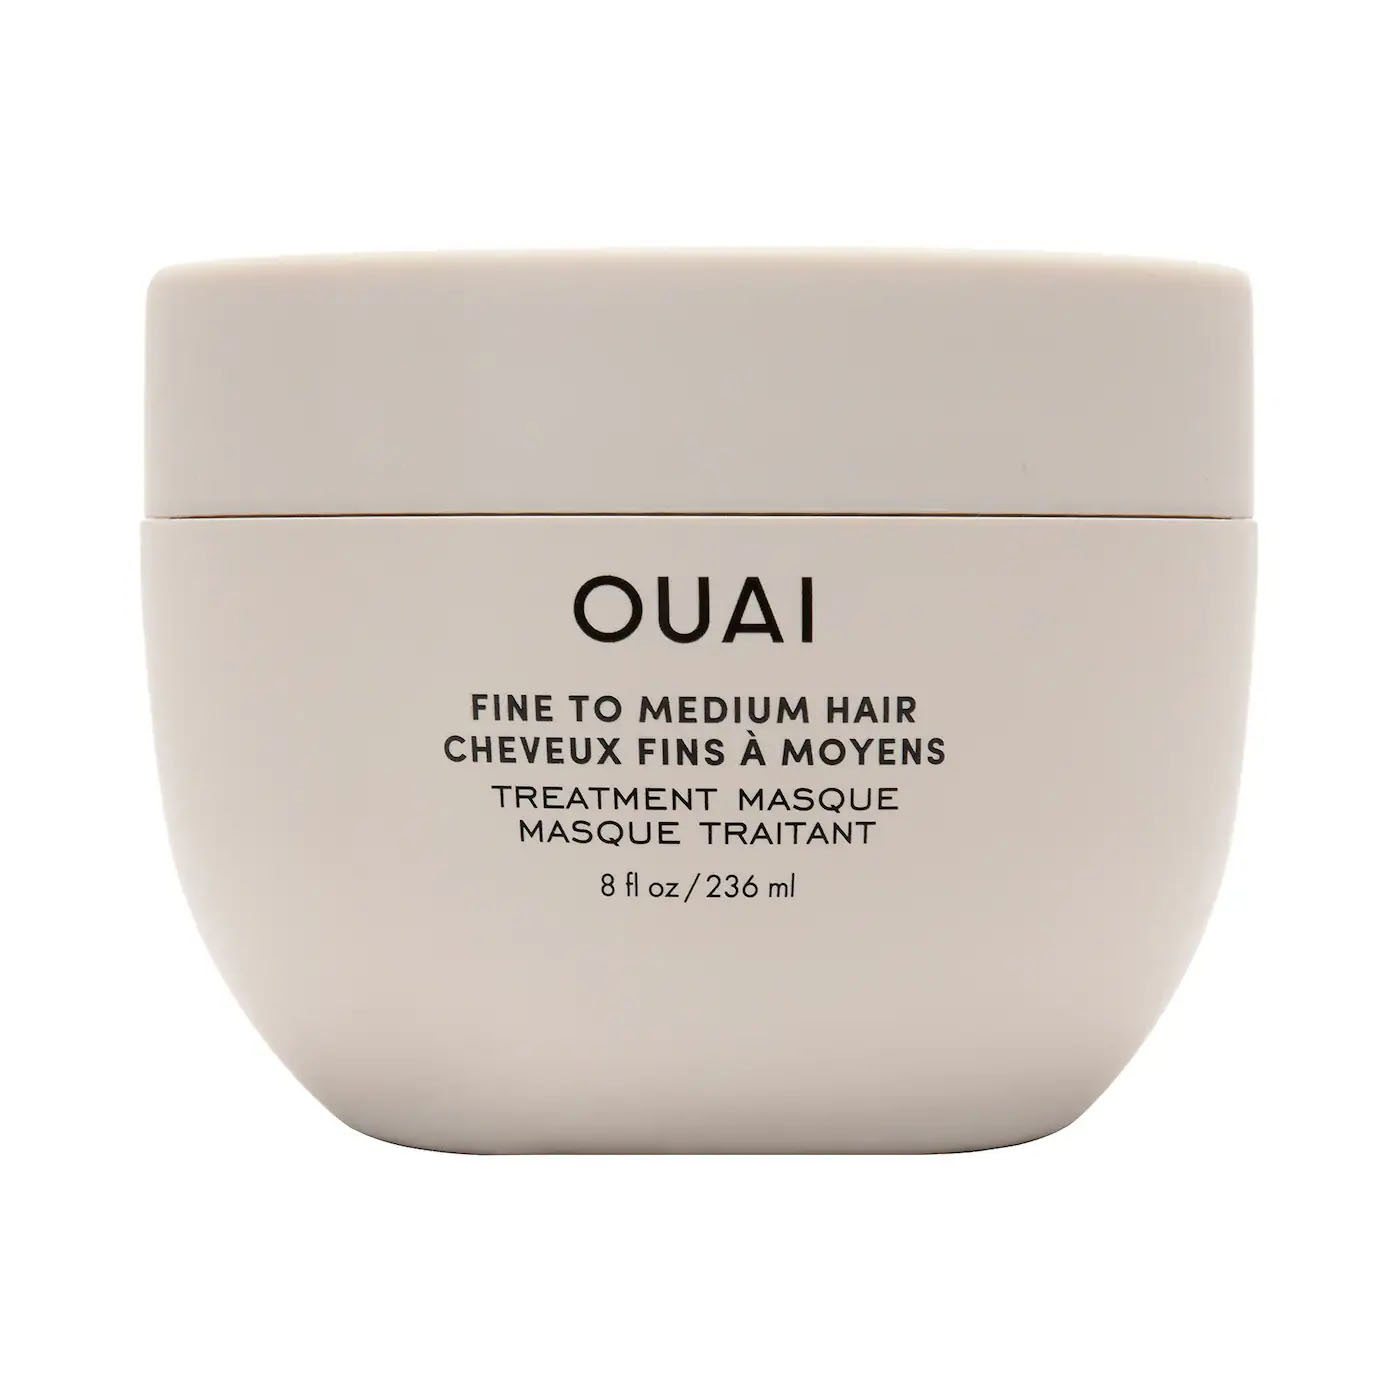 OUAI Treatment Mask for Fine and Medium Hair in beige tub